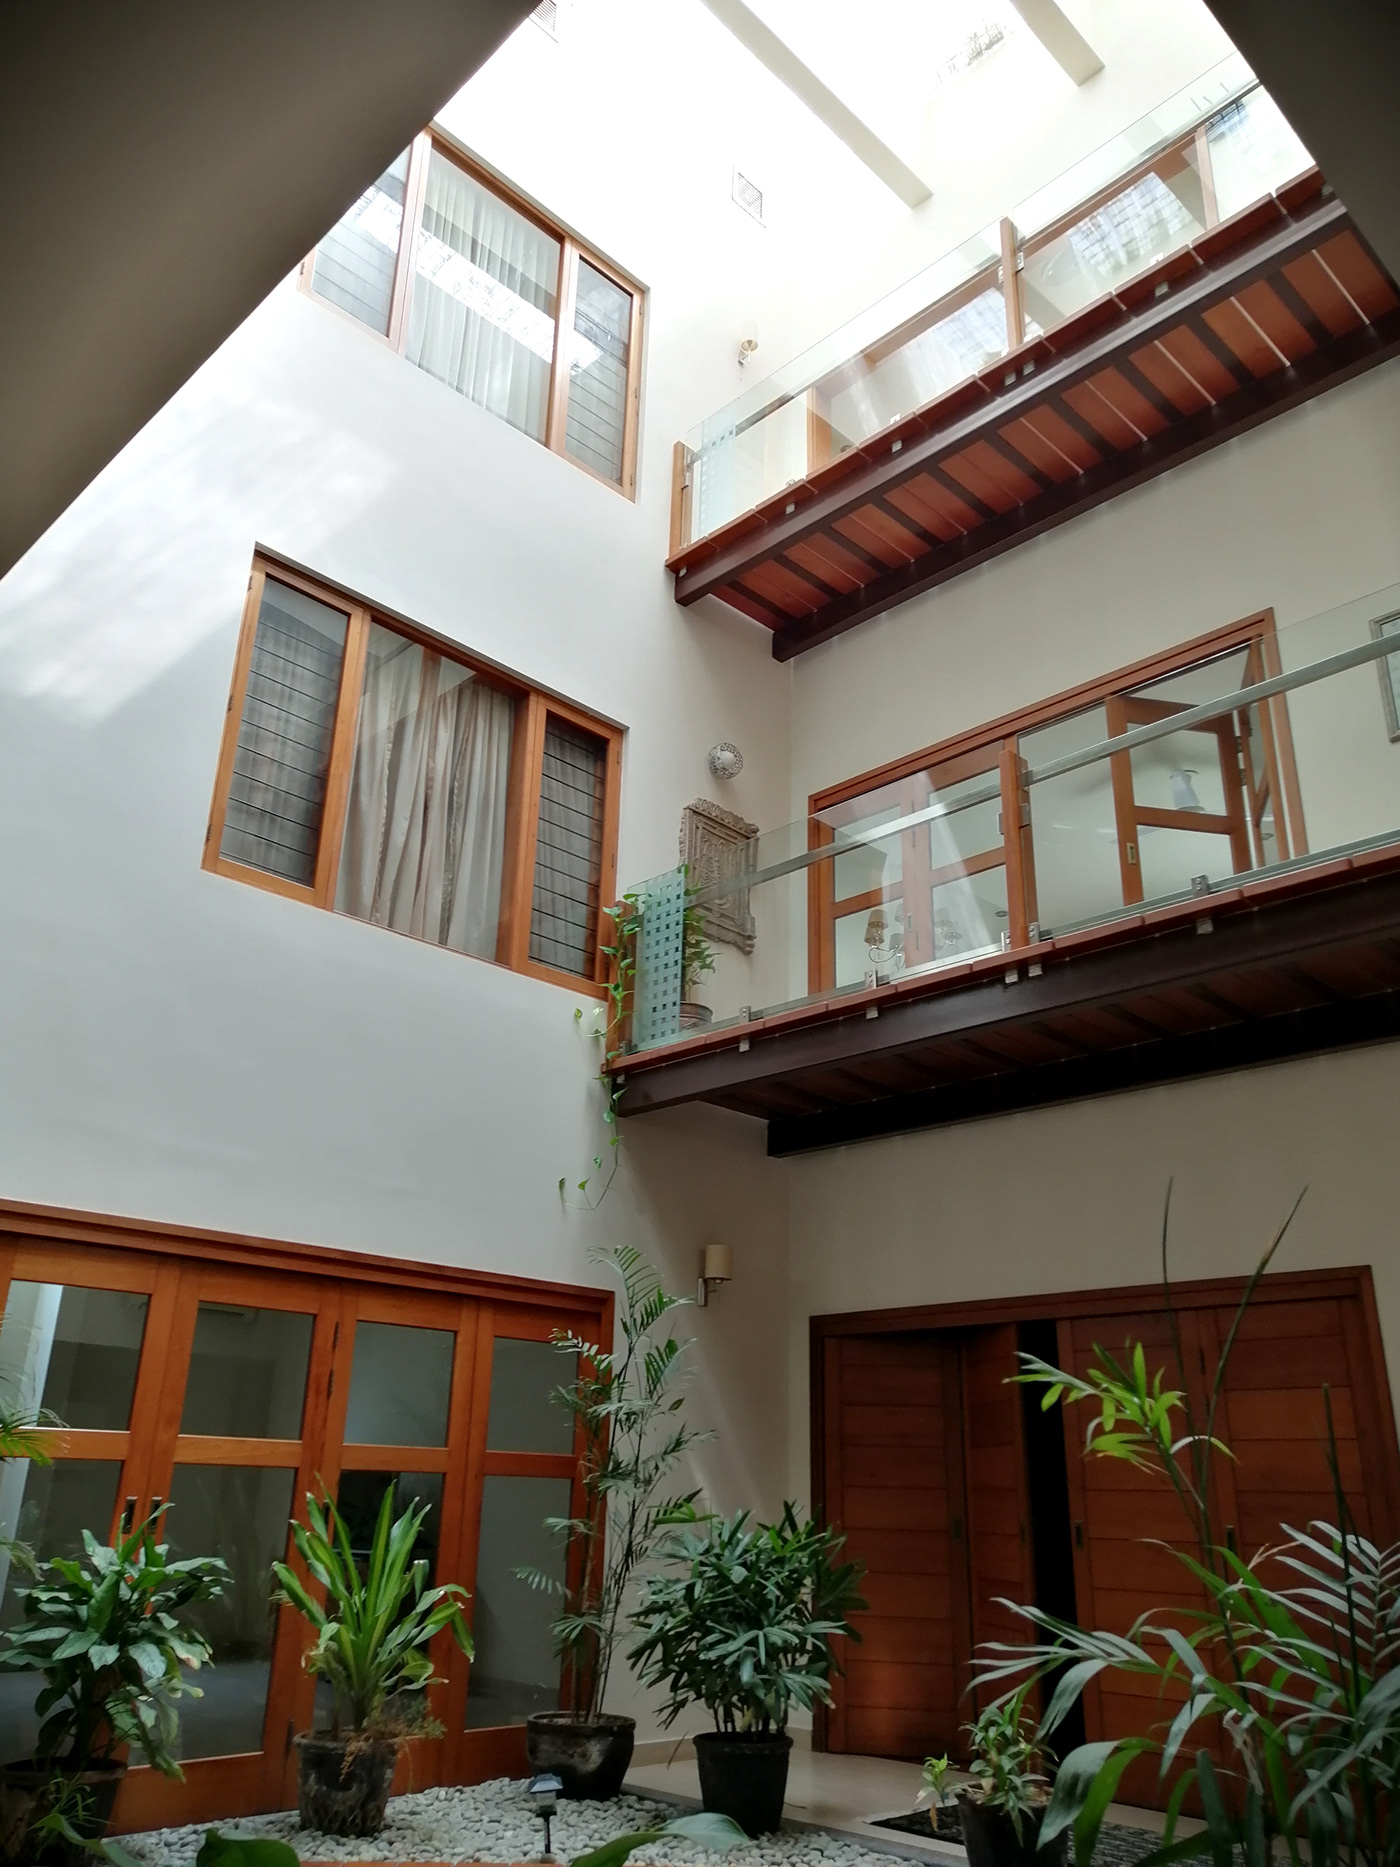 architecture indoor patio interior design  Landscape Design skylights